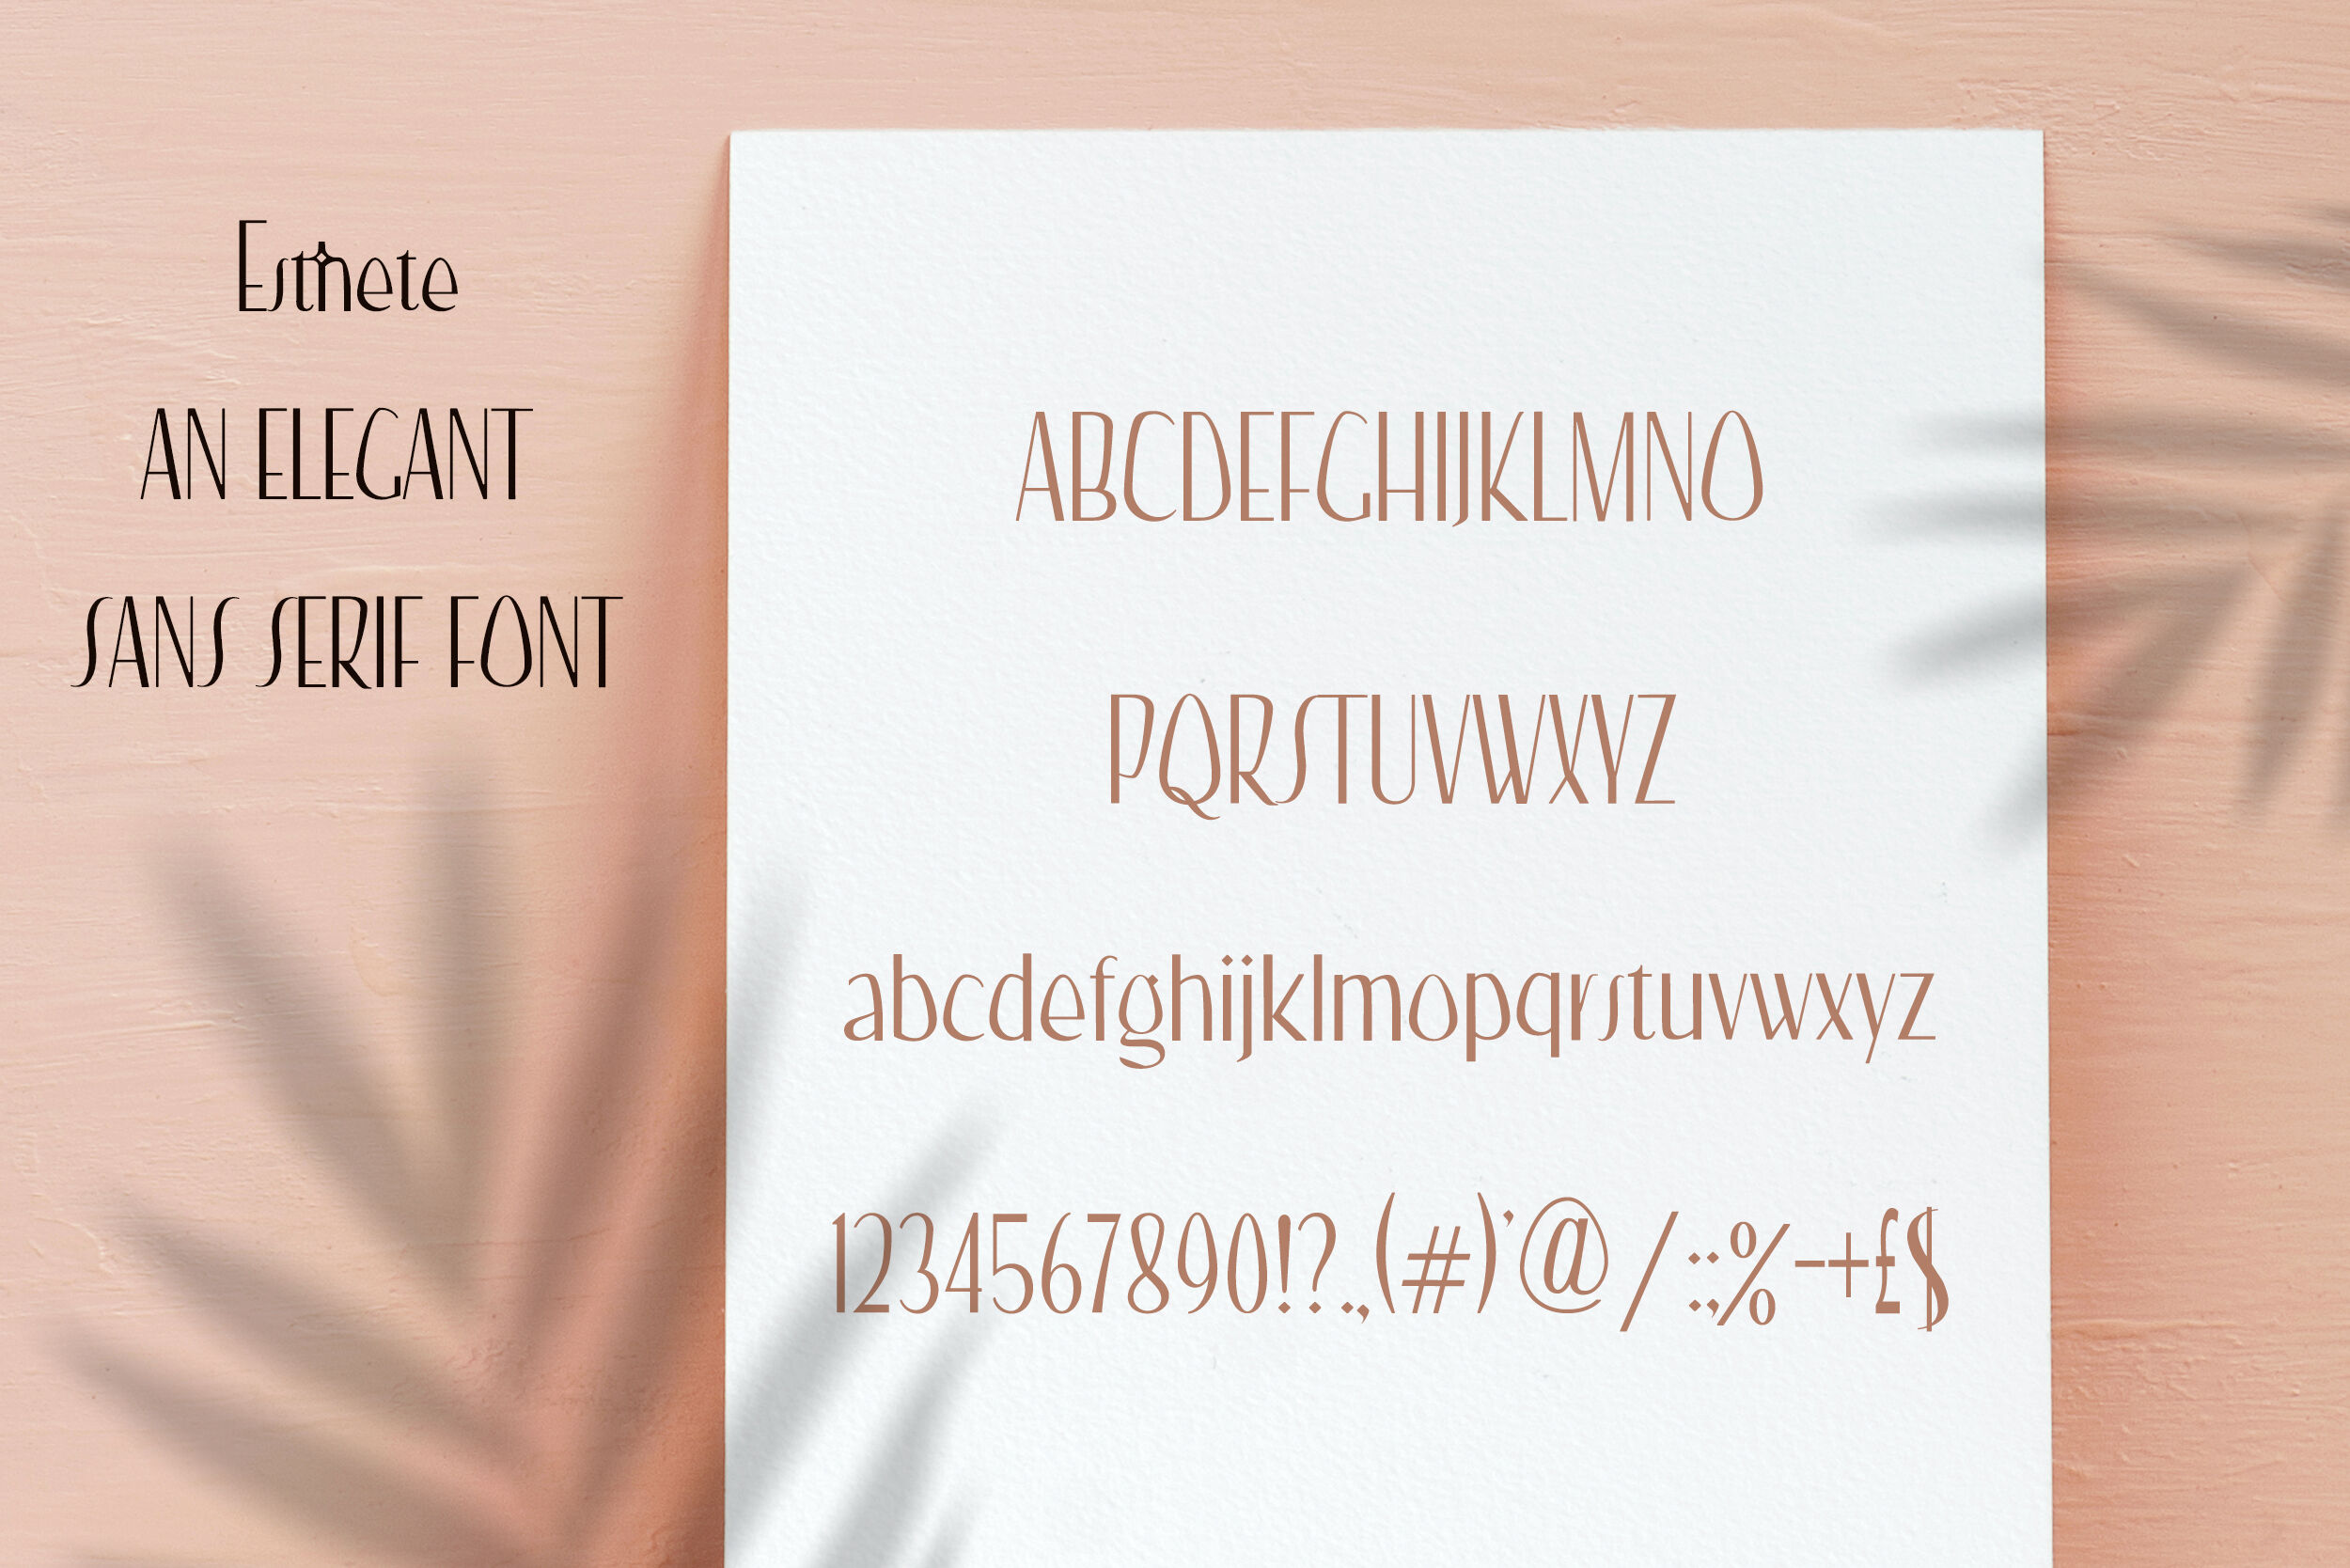 Esthete Elegant Classic Sans Serif Font By Labfcreations Thehungryjpeg Com